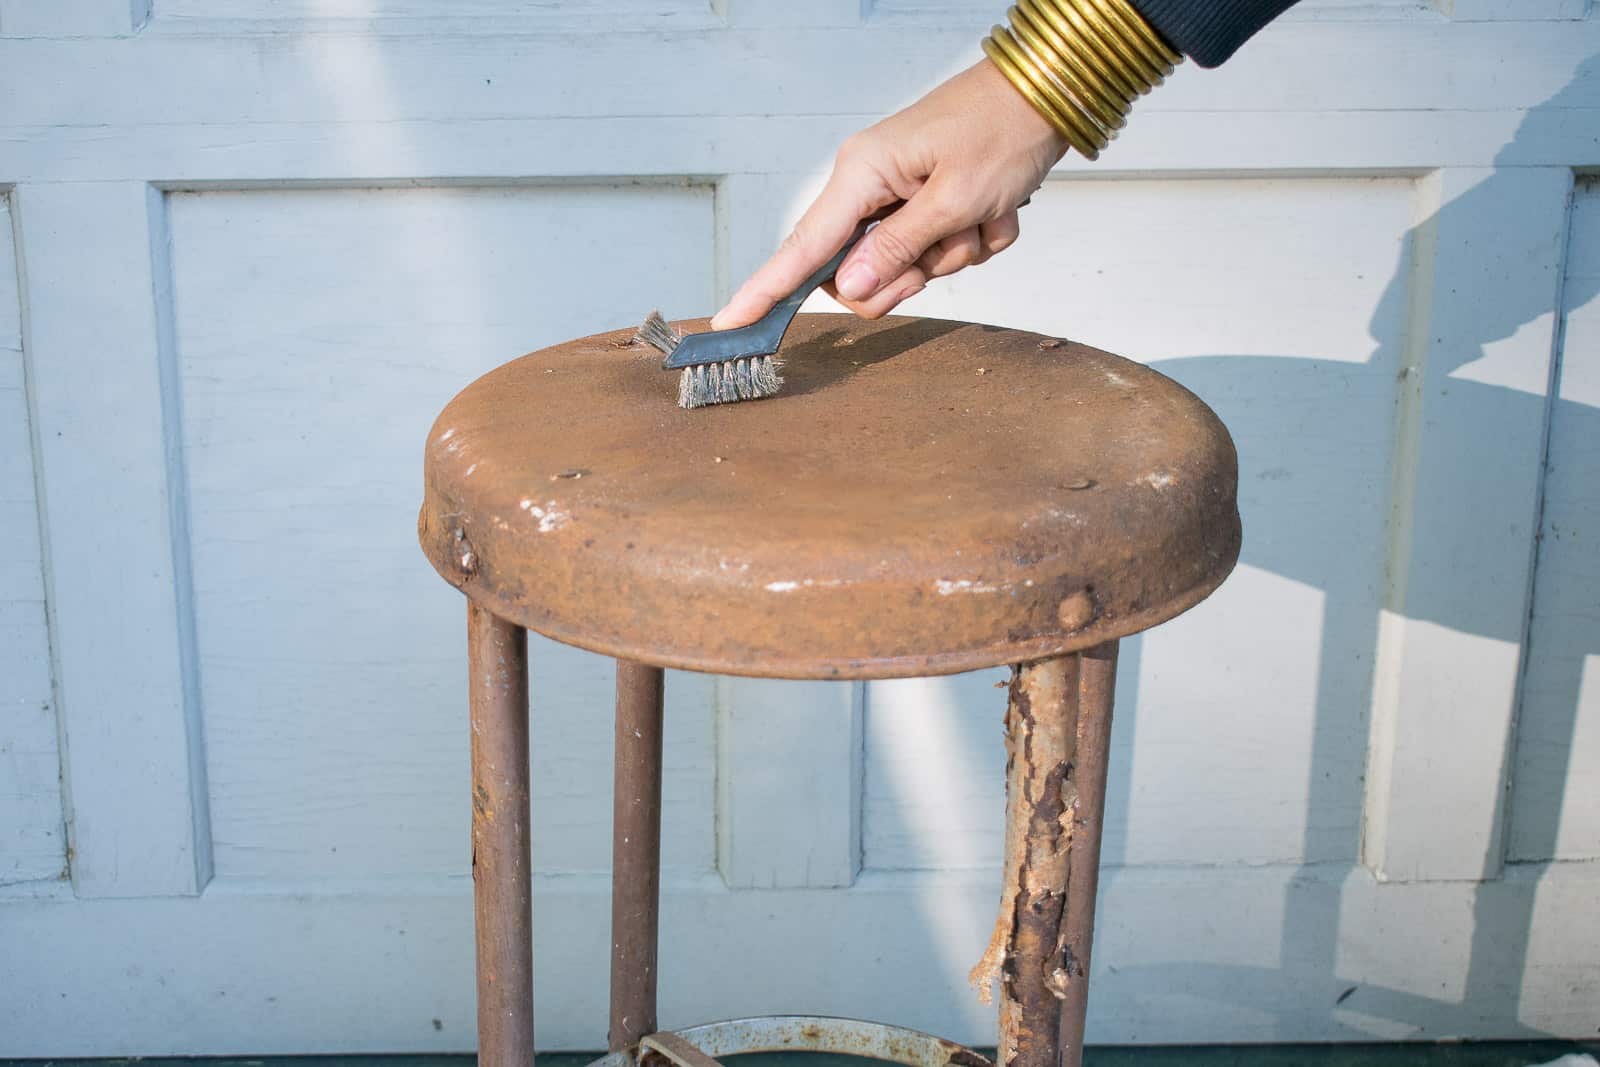 wire brush to metal stool